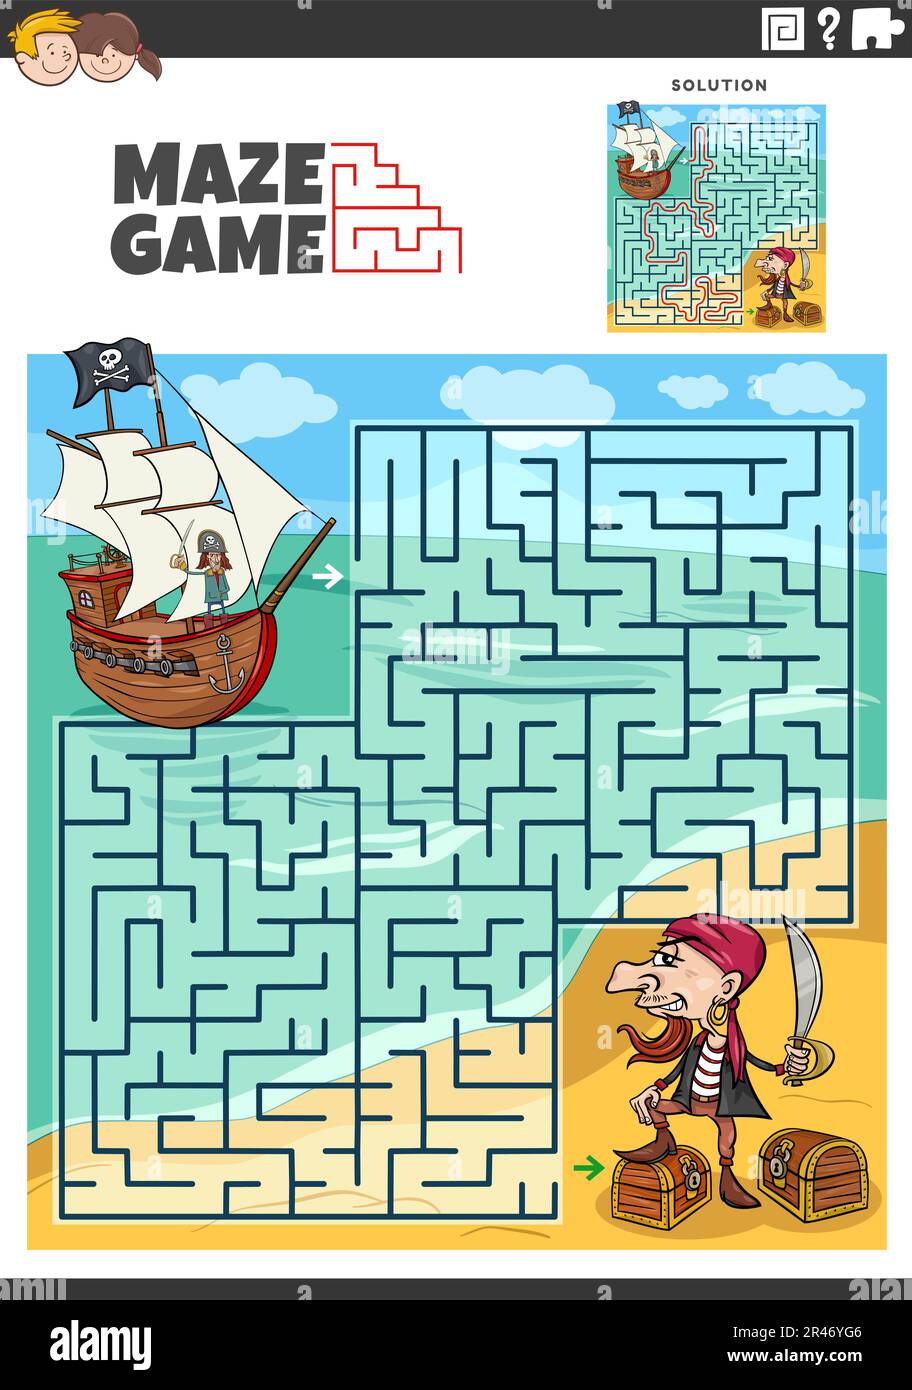 Pirate Birthday Games Activities Puzzles Mazes - FUN!